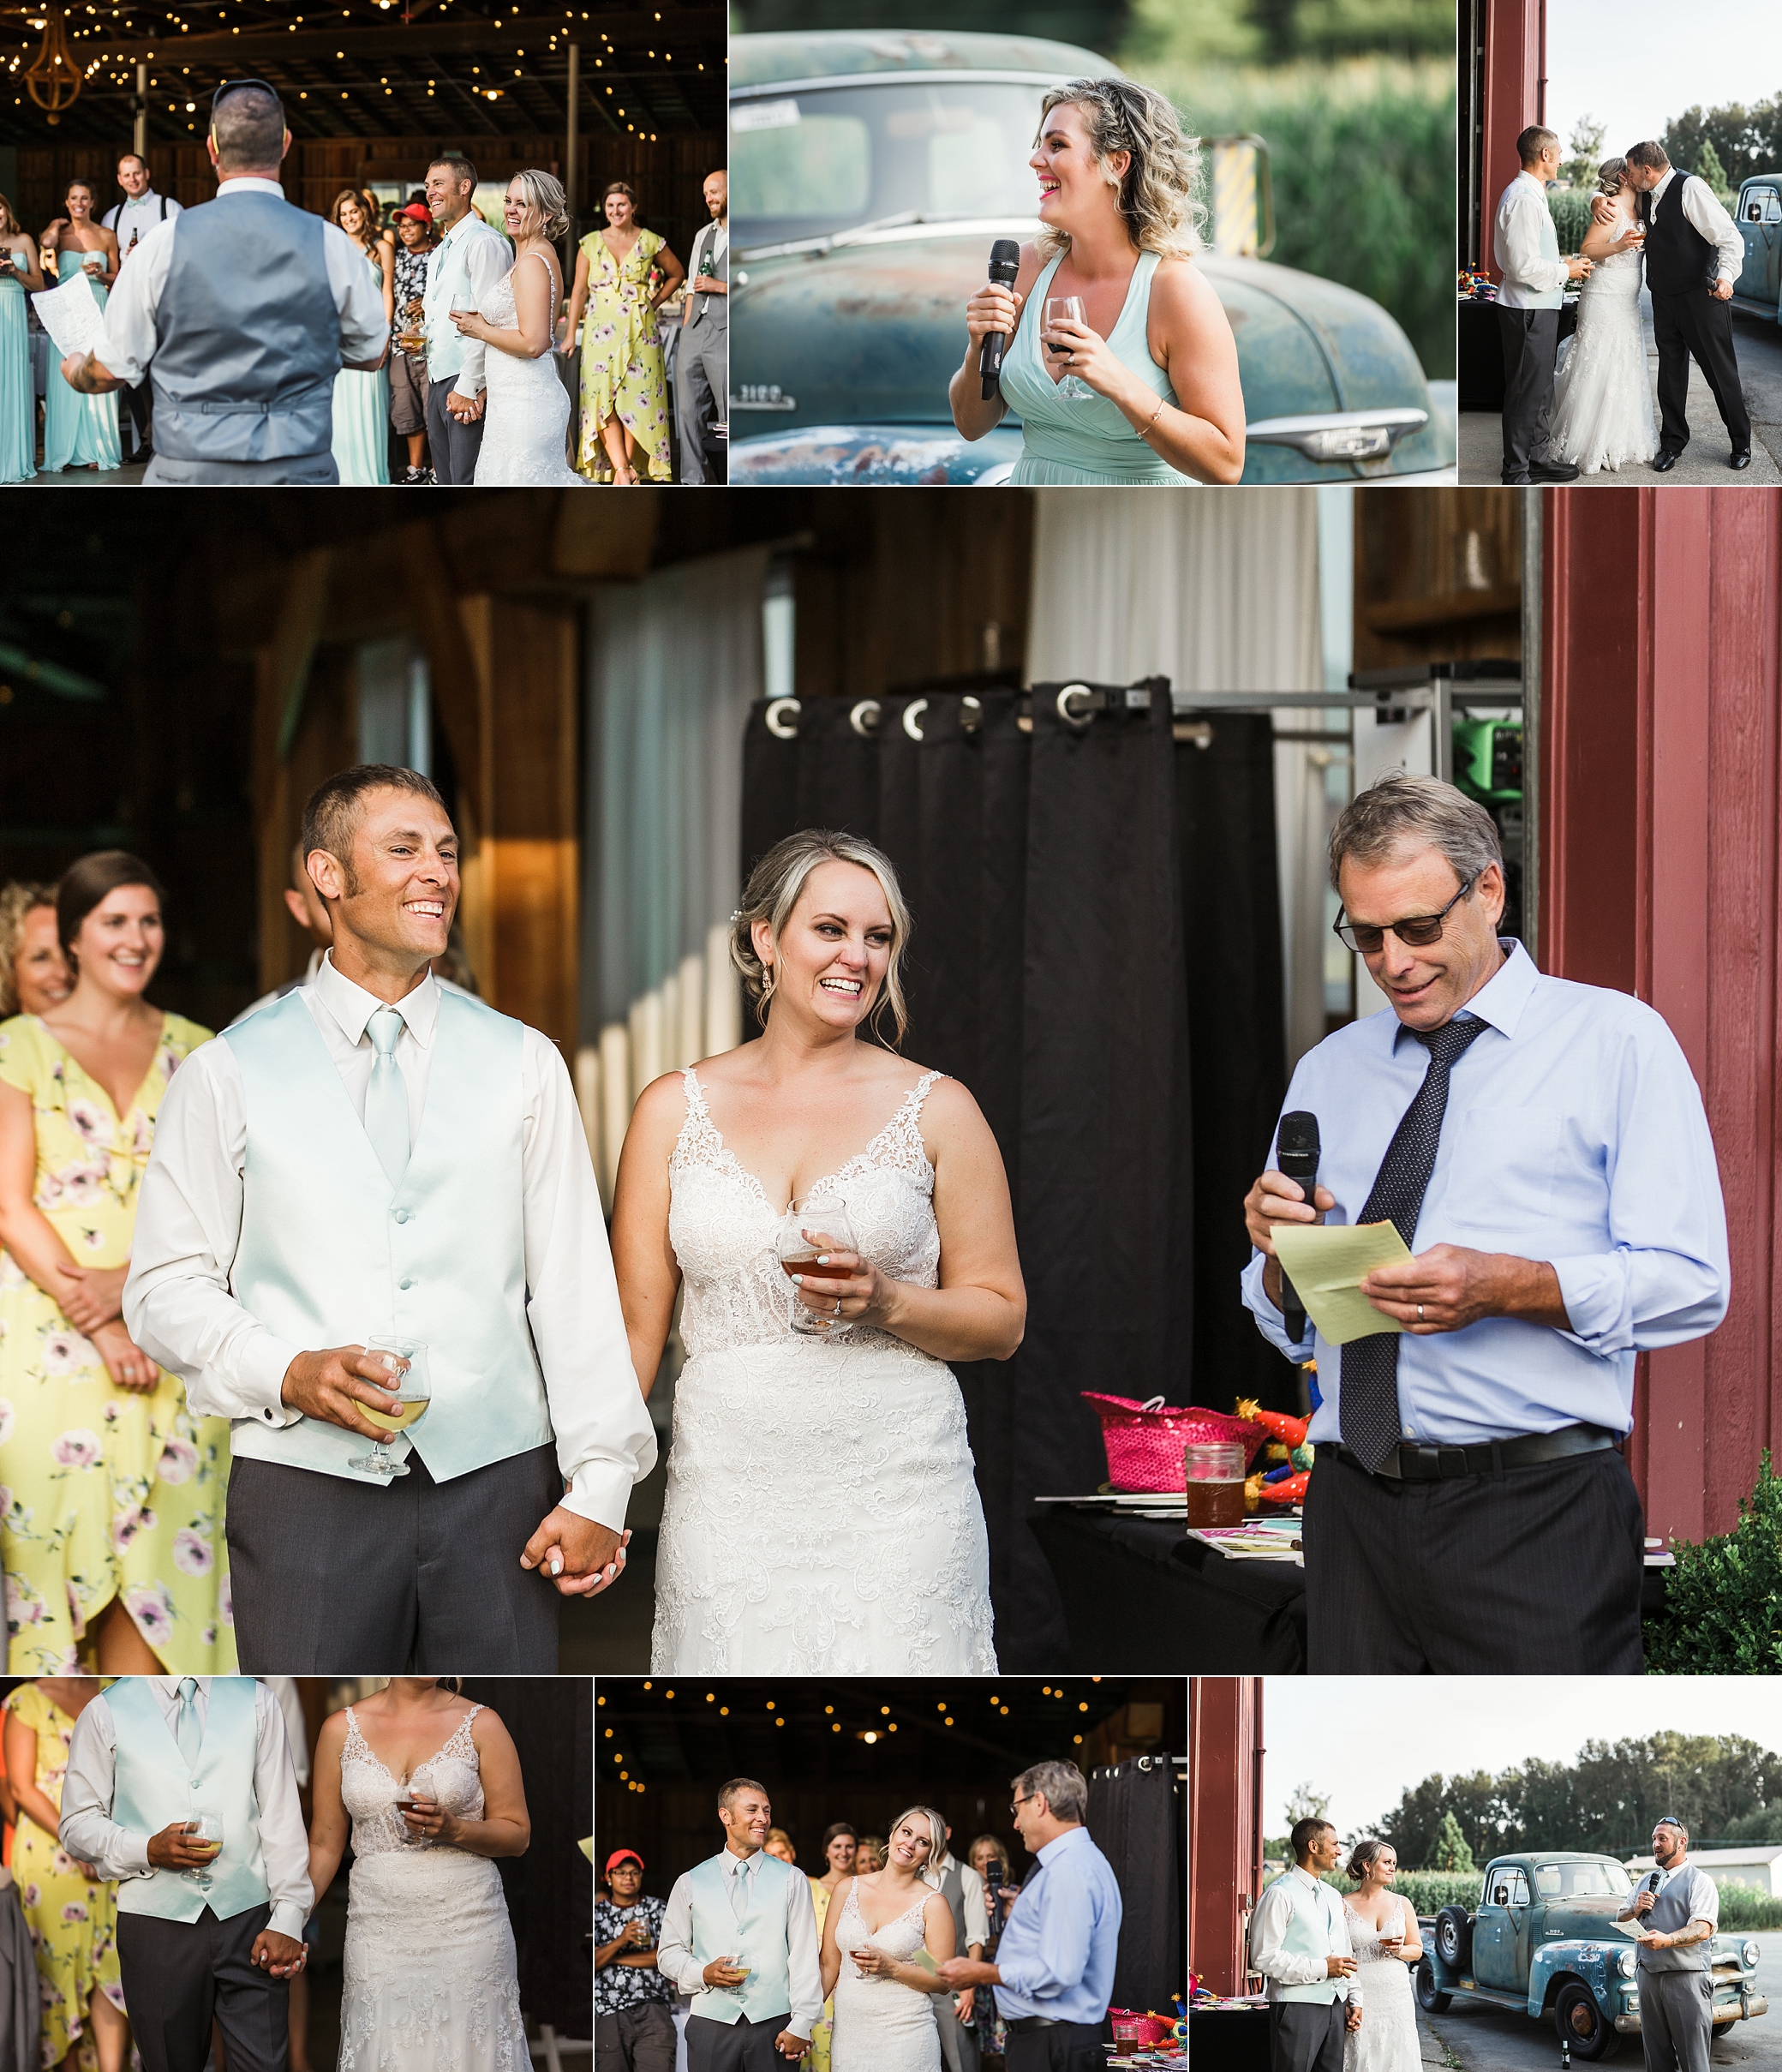 Wedding reception and toasts at Maplehurst Farm Wedding Venue in Mount Vernon, WA. Photographed by Washington Wedding Photographer, Megan Montalvo Photography. 